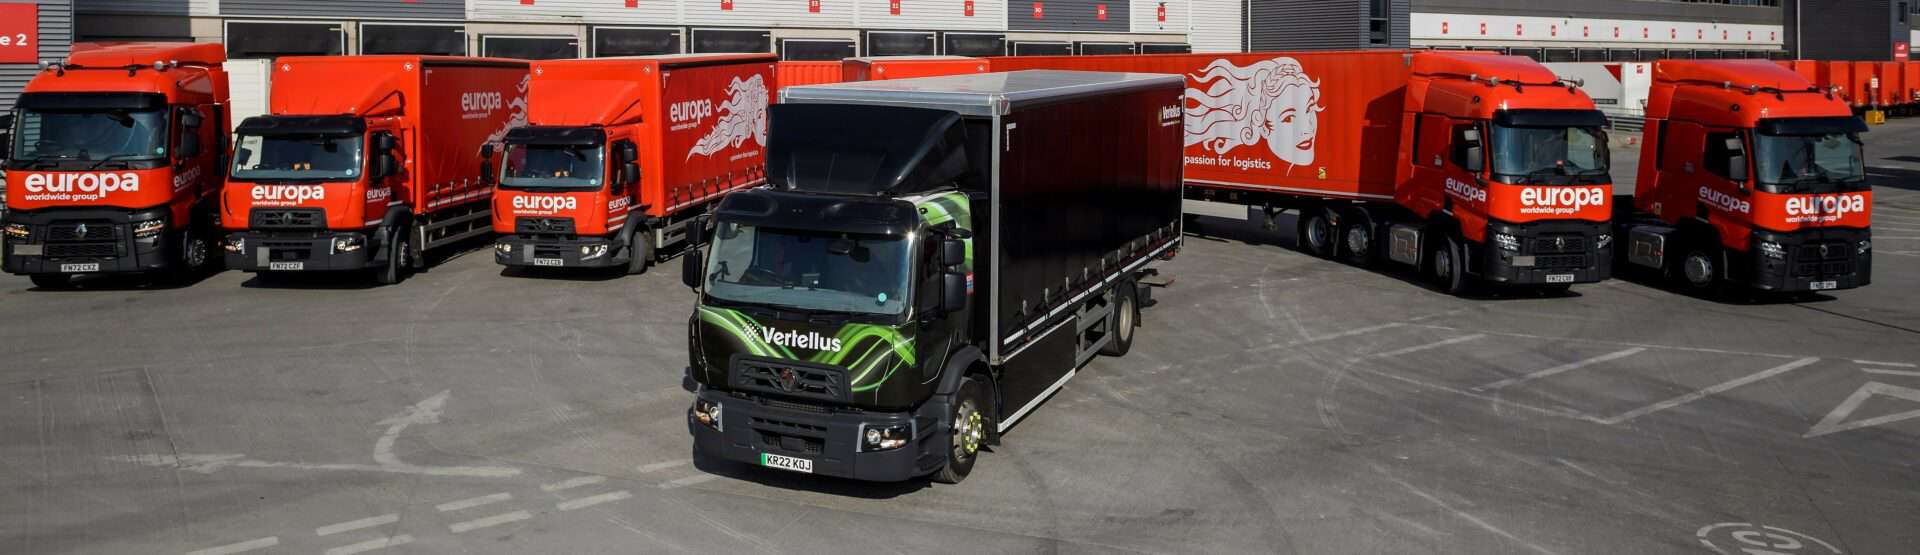 Renault Vertellus truck in the Europa domestic fleet